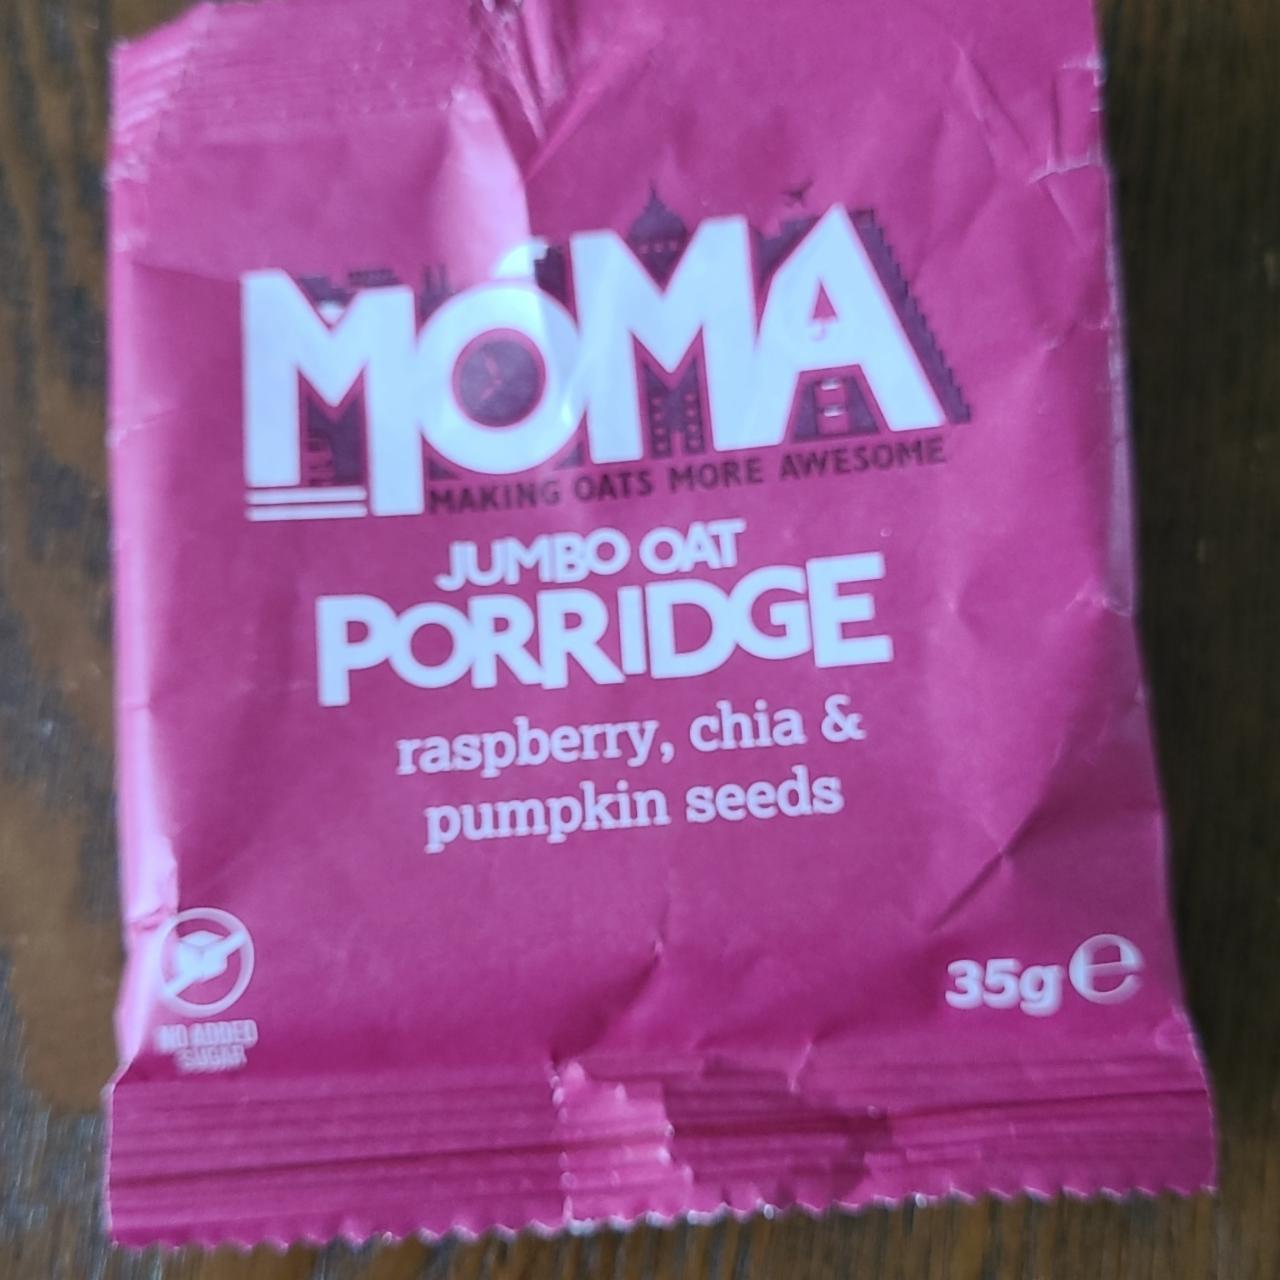 Fotografie - Jumbo oat Porridge raspberry, chia & pumpkin seeds Moma